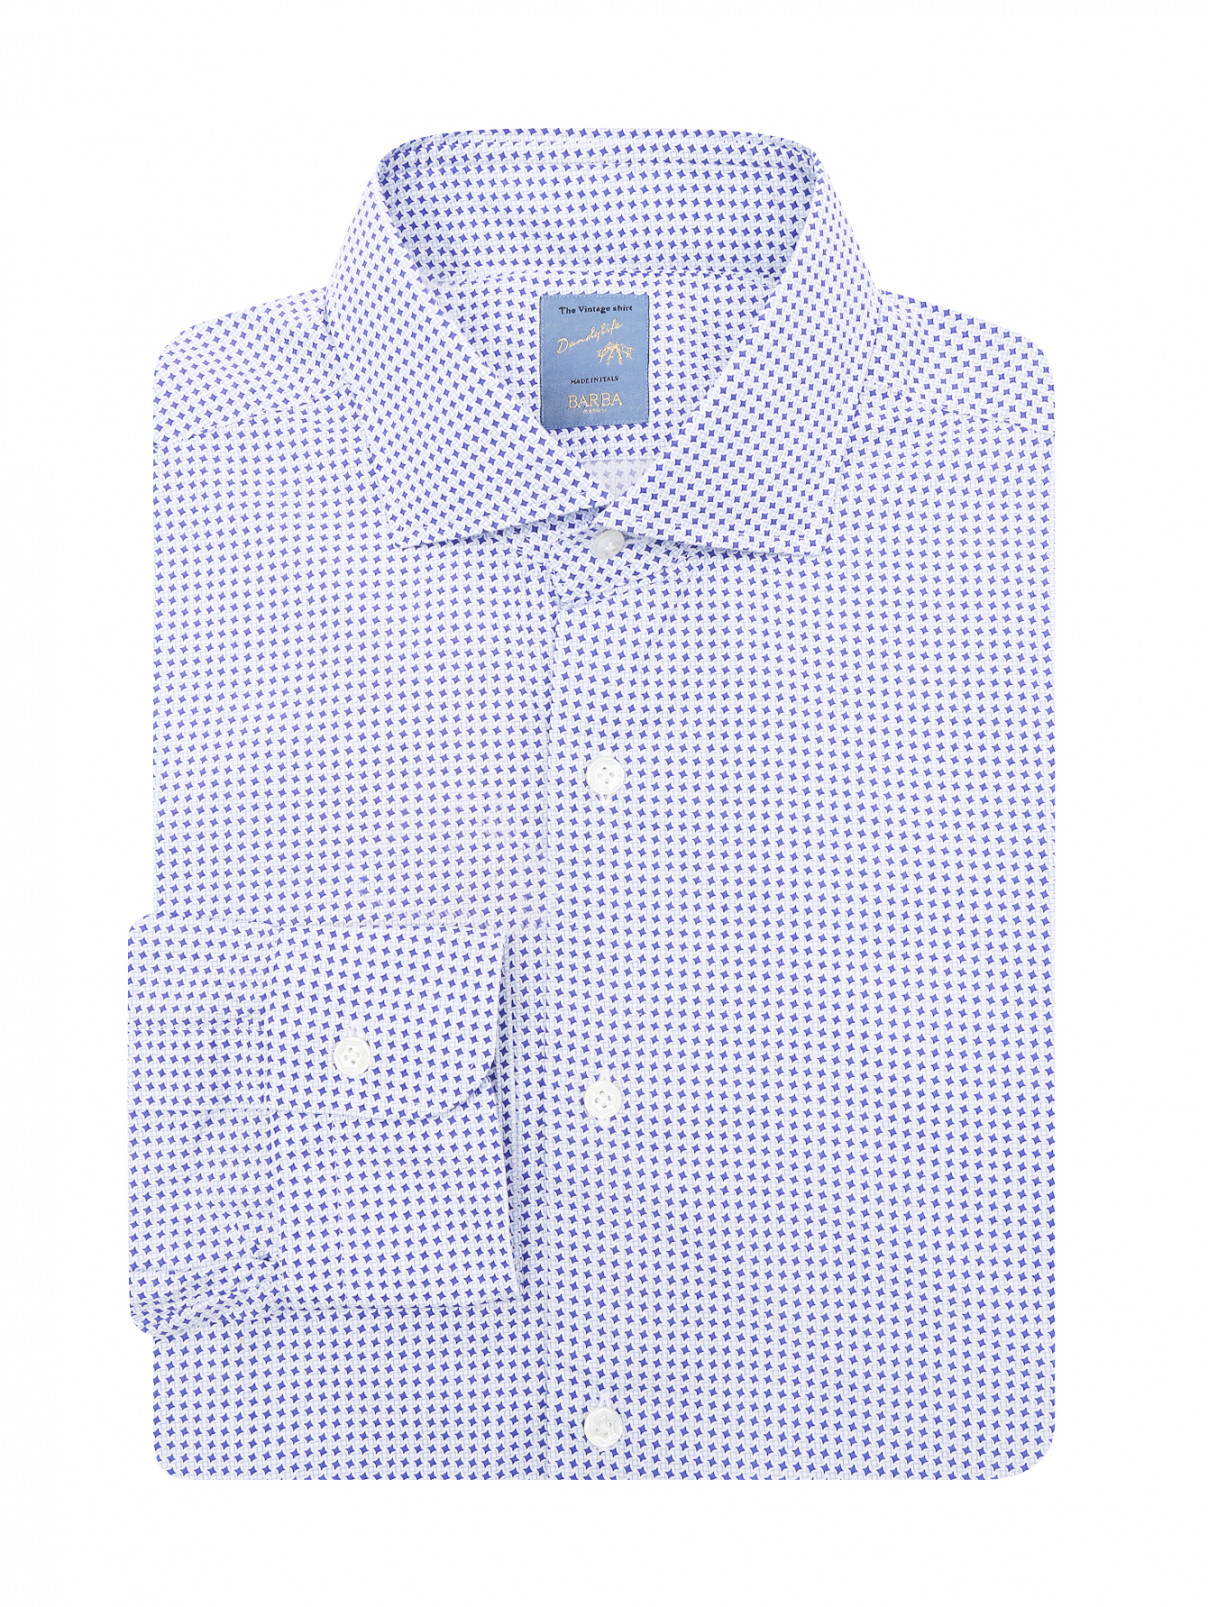 Рубашка из хлопка с узором Barba Napoli  –  Общий вид  – Цвет:  Синий